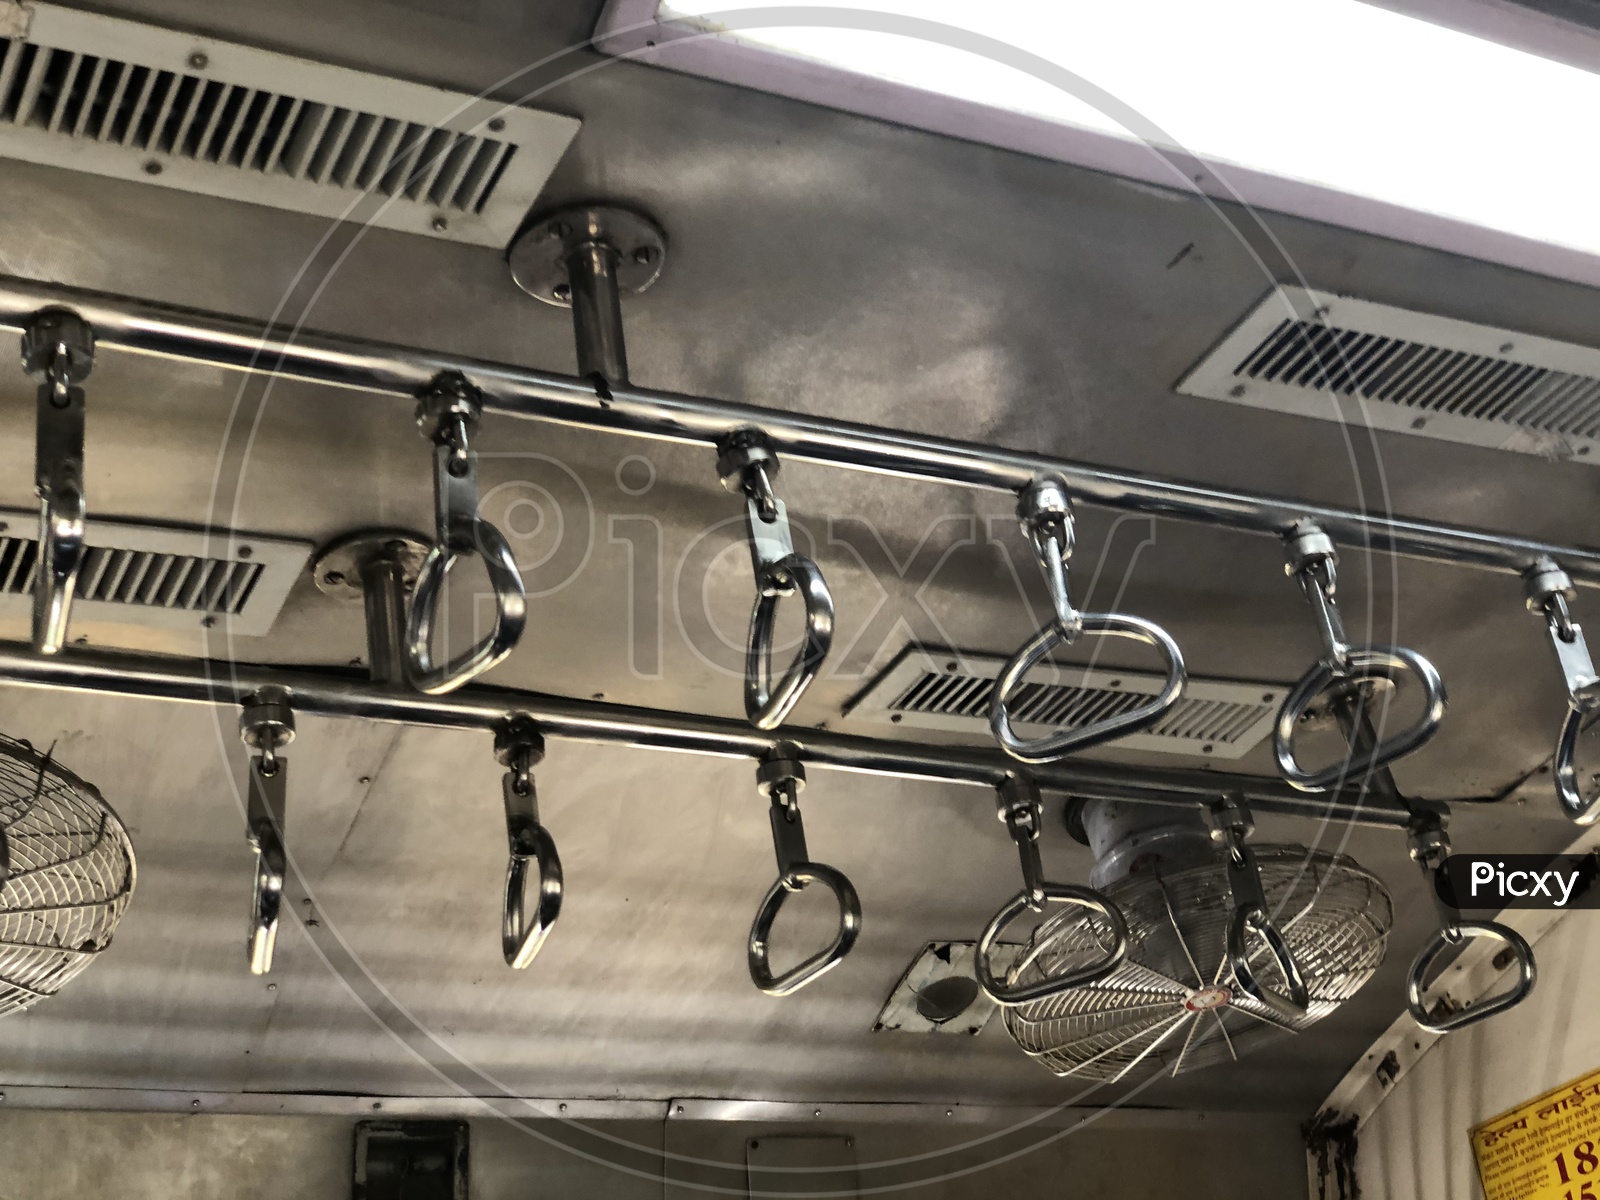 Handle Bars For Passengers Support In Mumbai Suburban Train